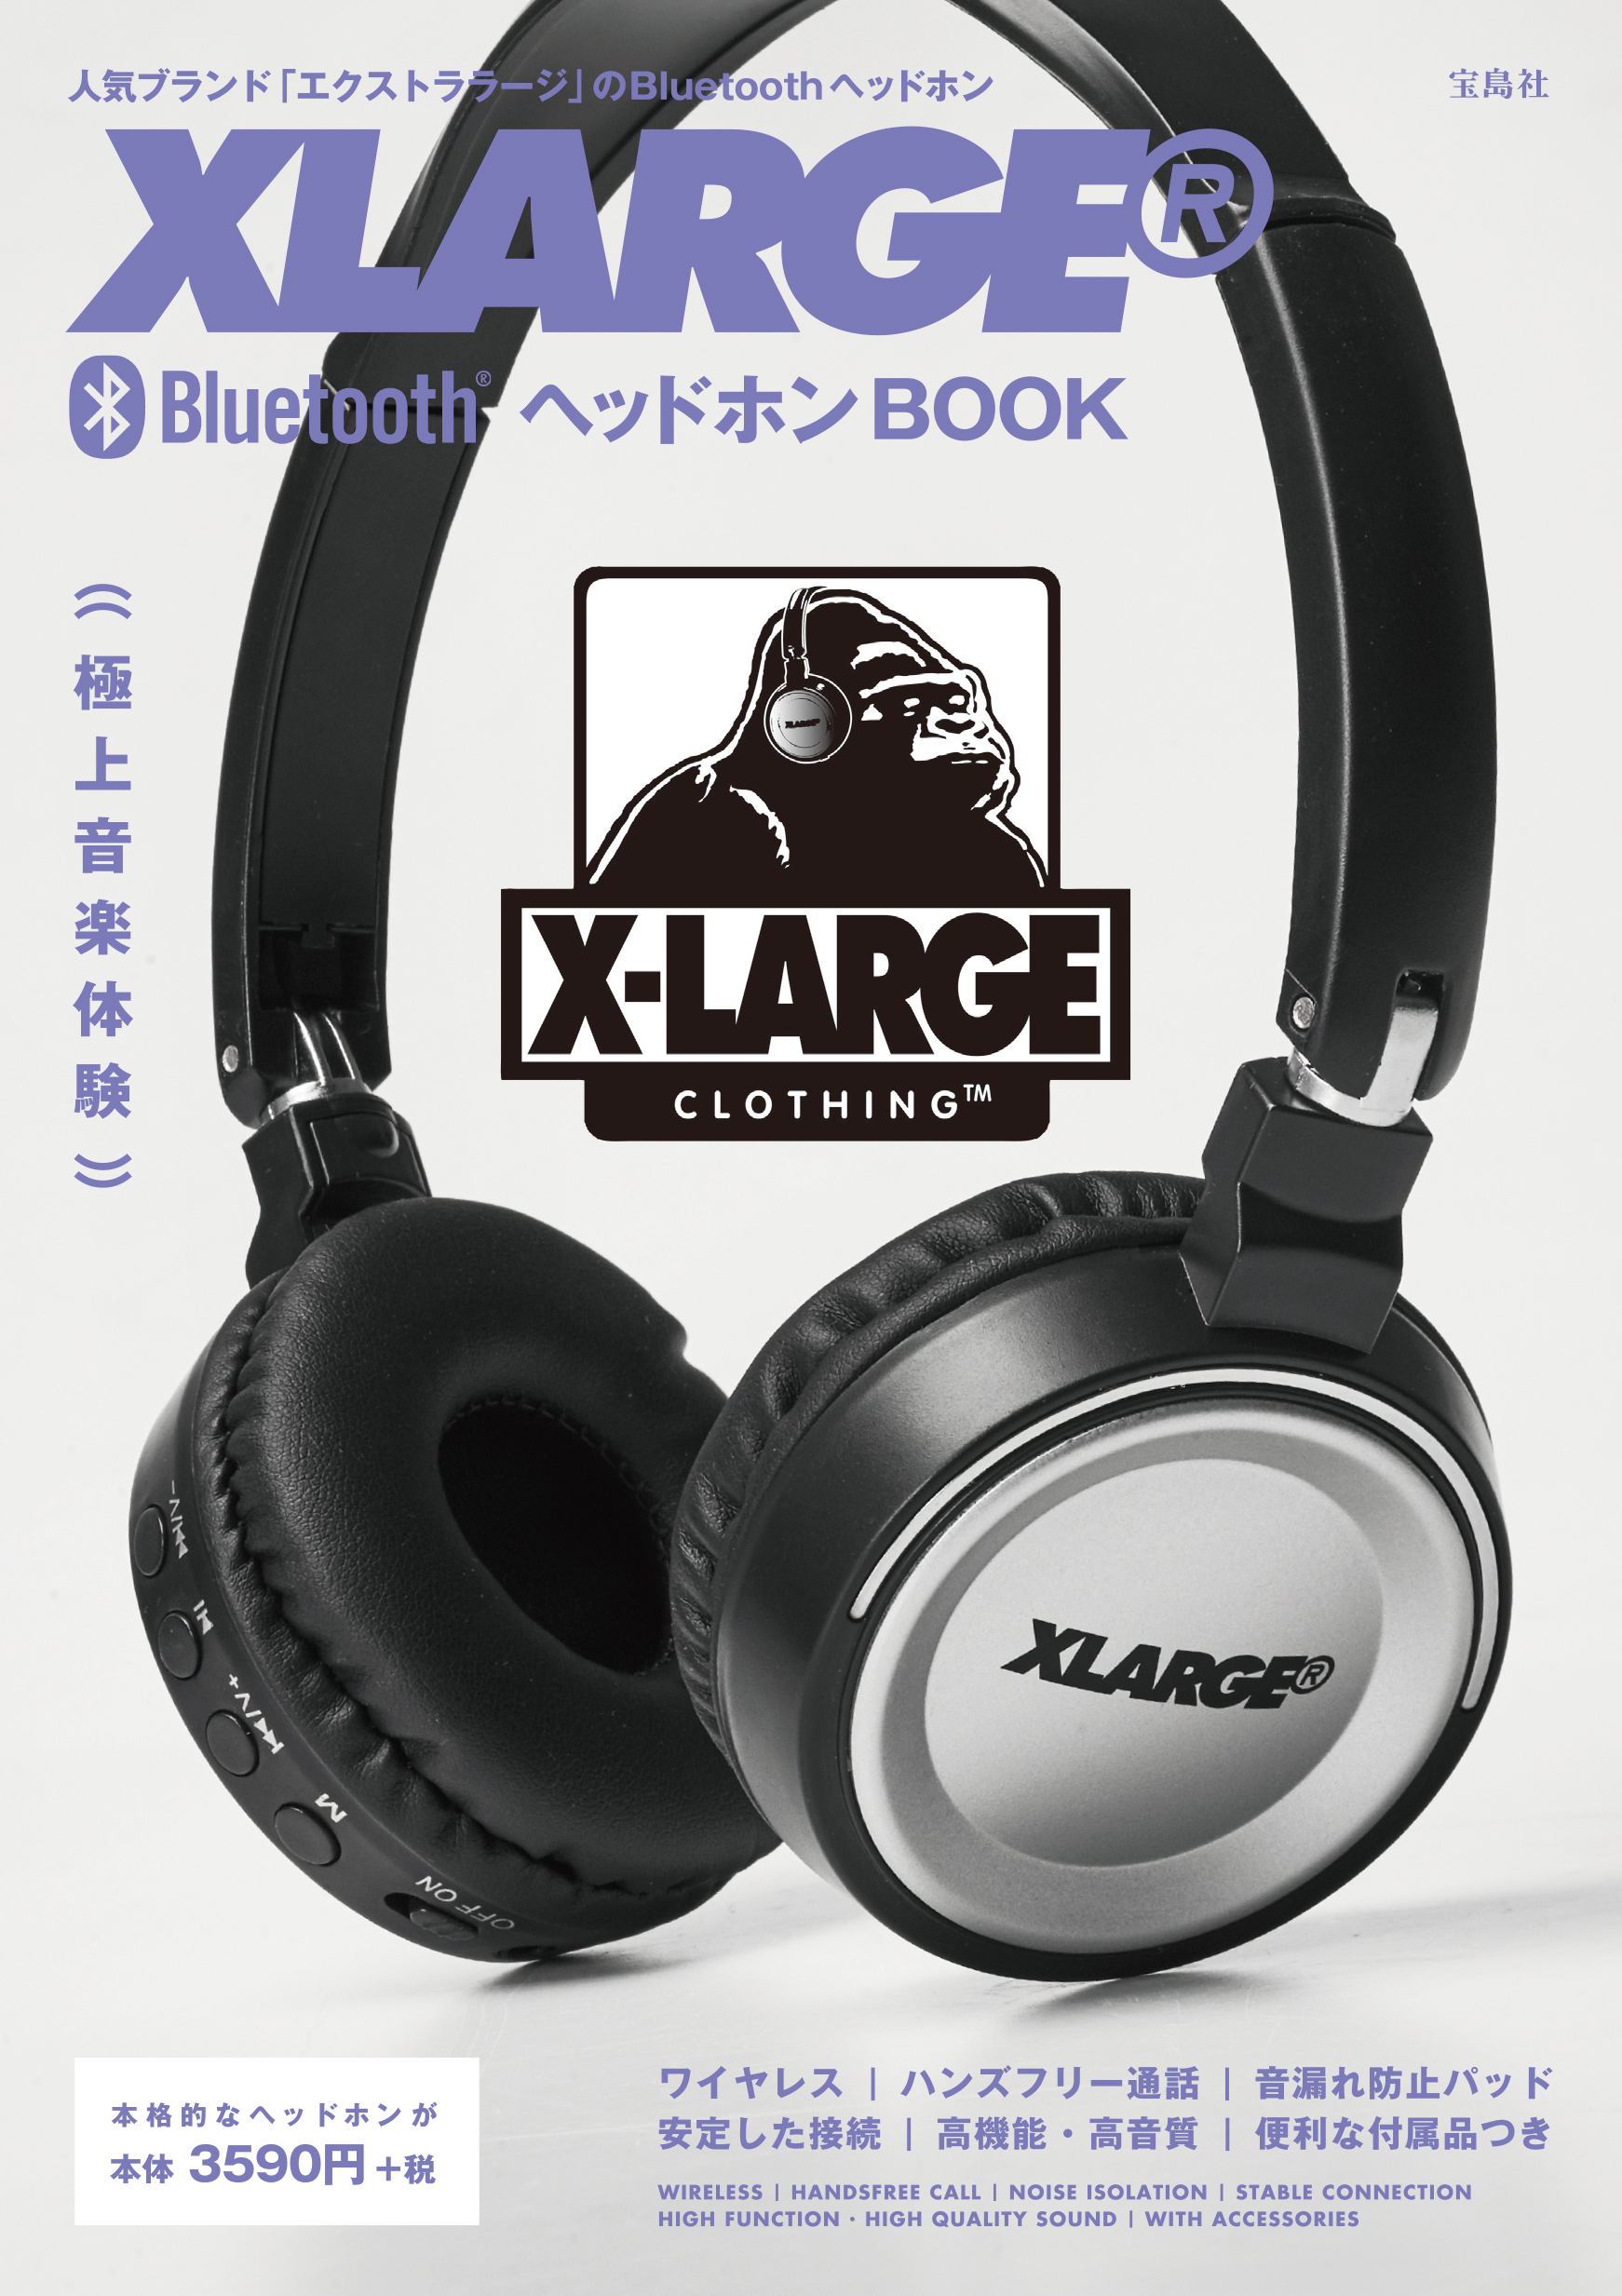 La発人気ストリートブランド Xlarge Bluetoothヘッドホン 11 19 月 発売 新刊案内 株式会社 宝島社のプレスリリース